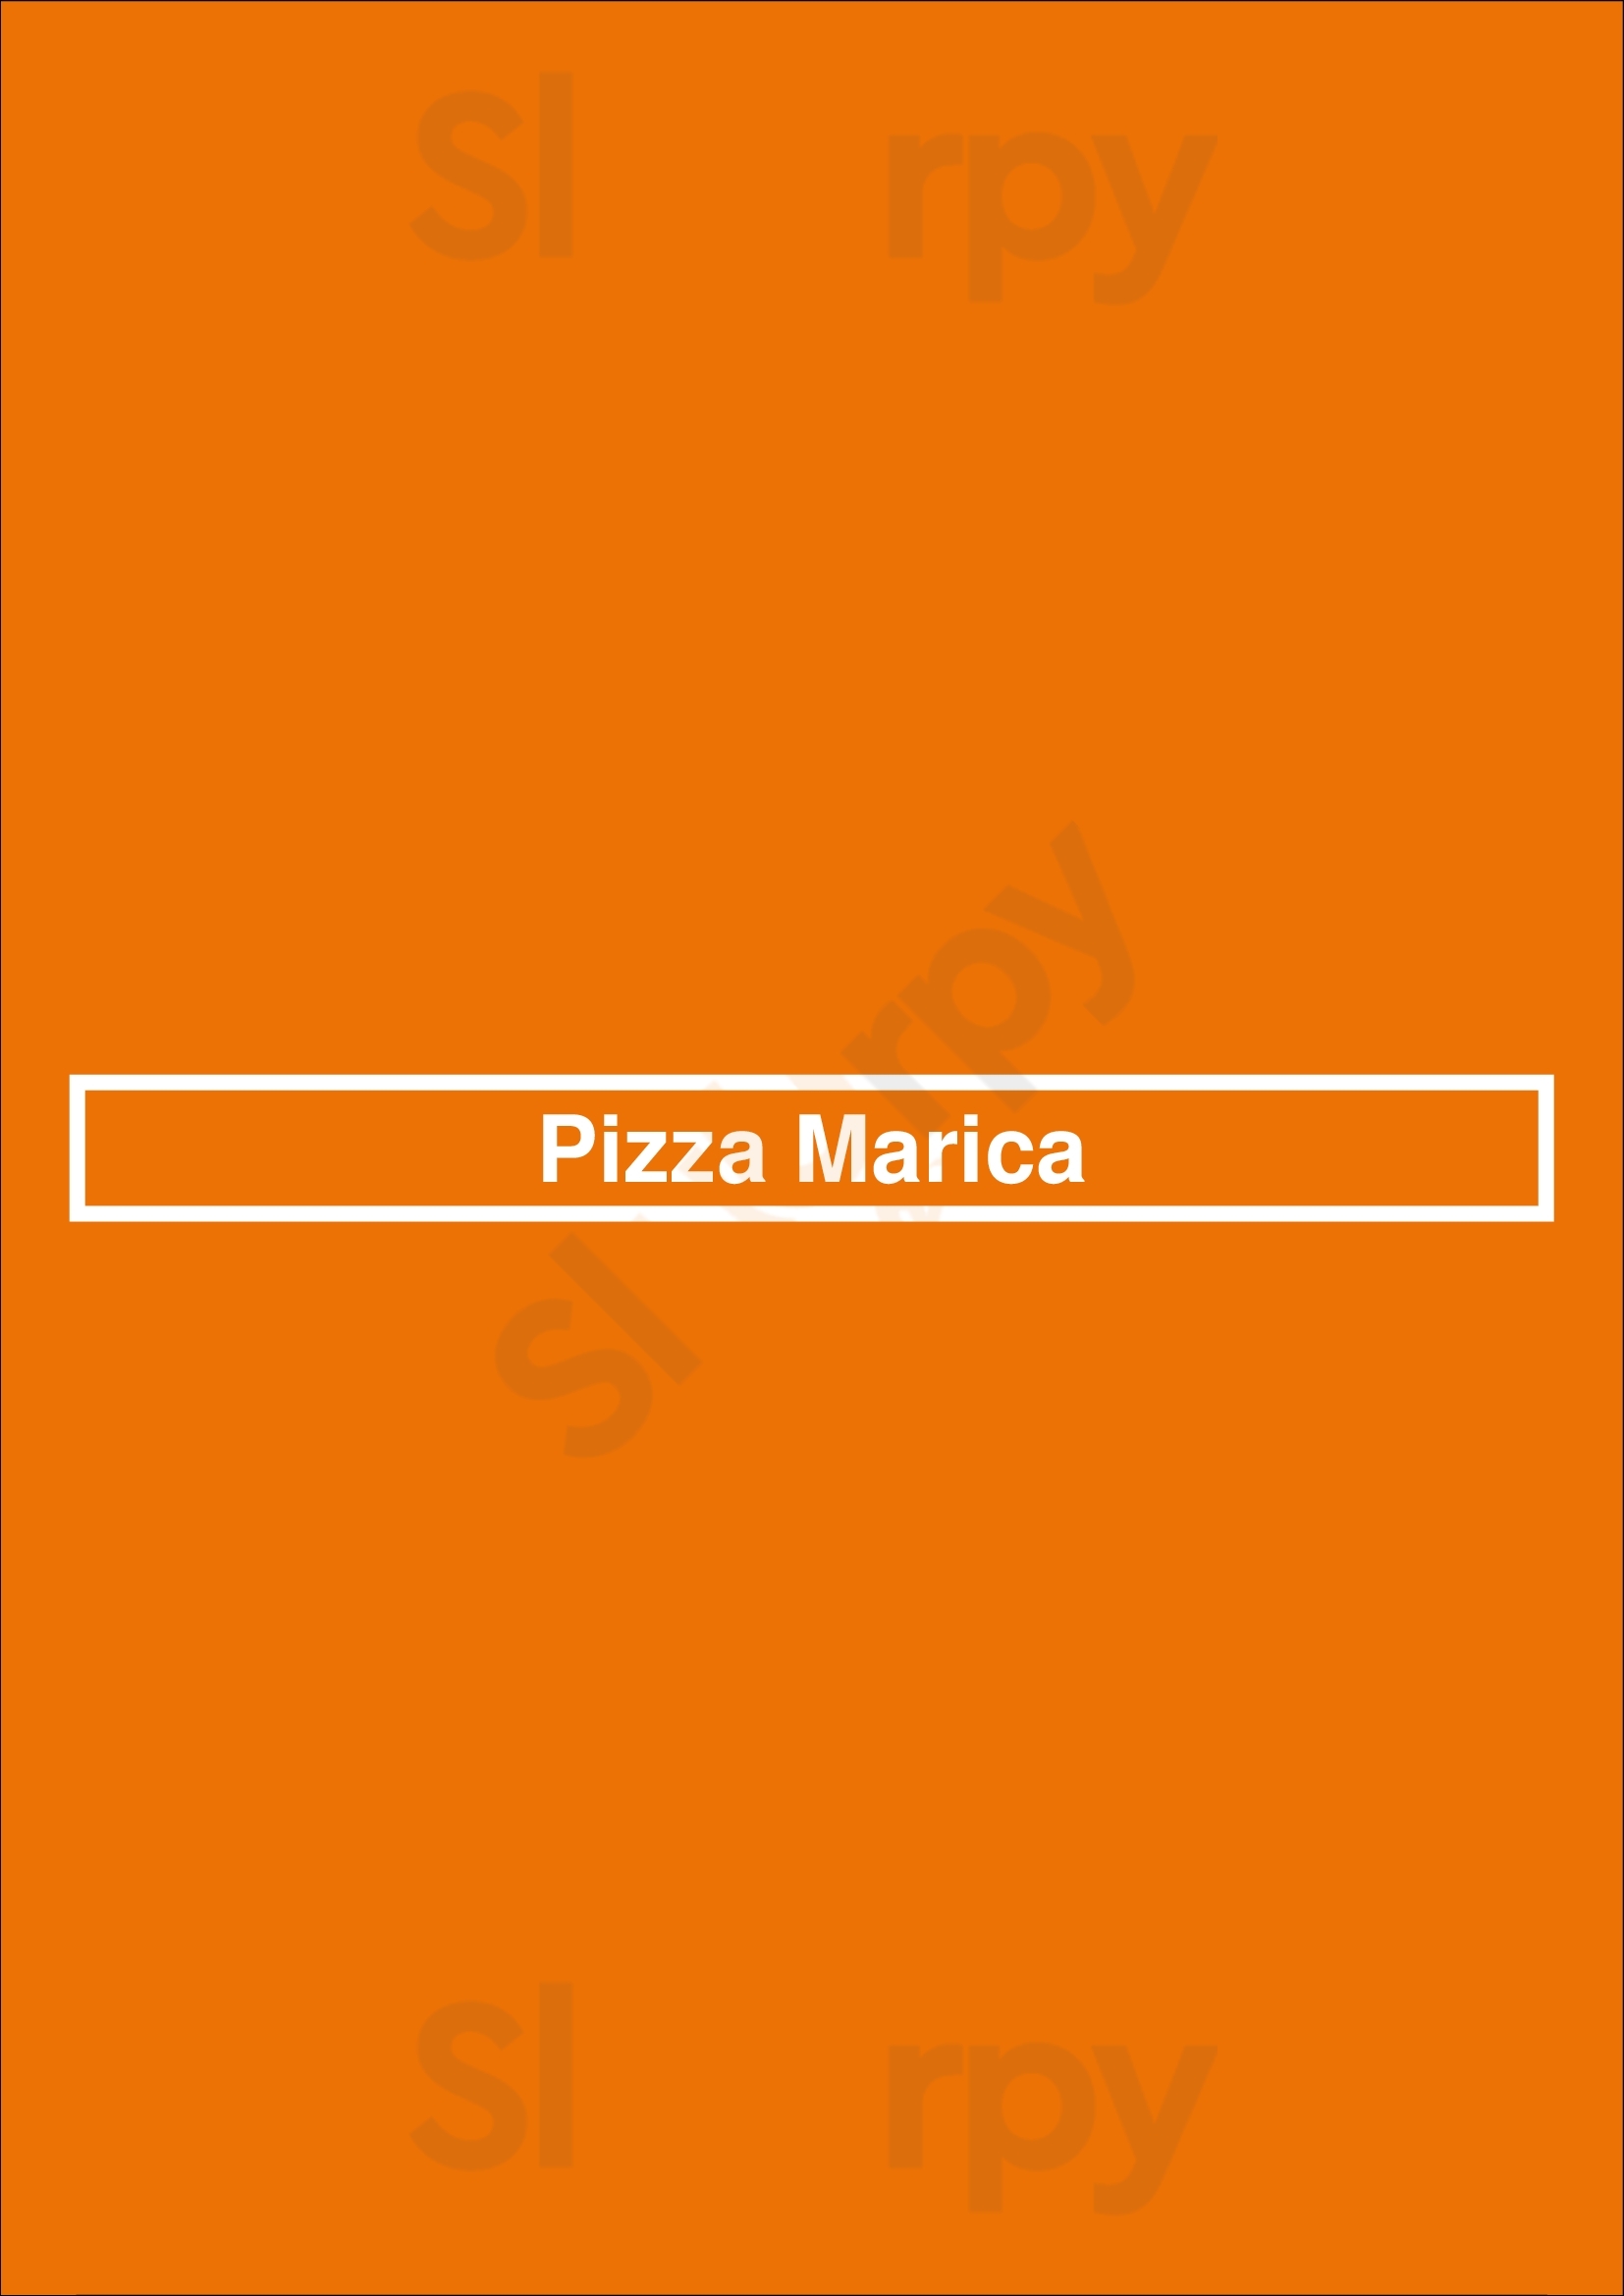 Pizza Marica Oakland Menu - 1